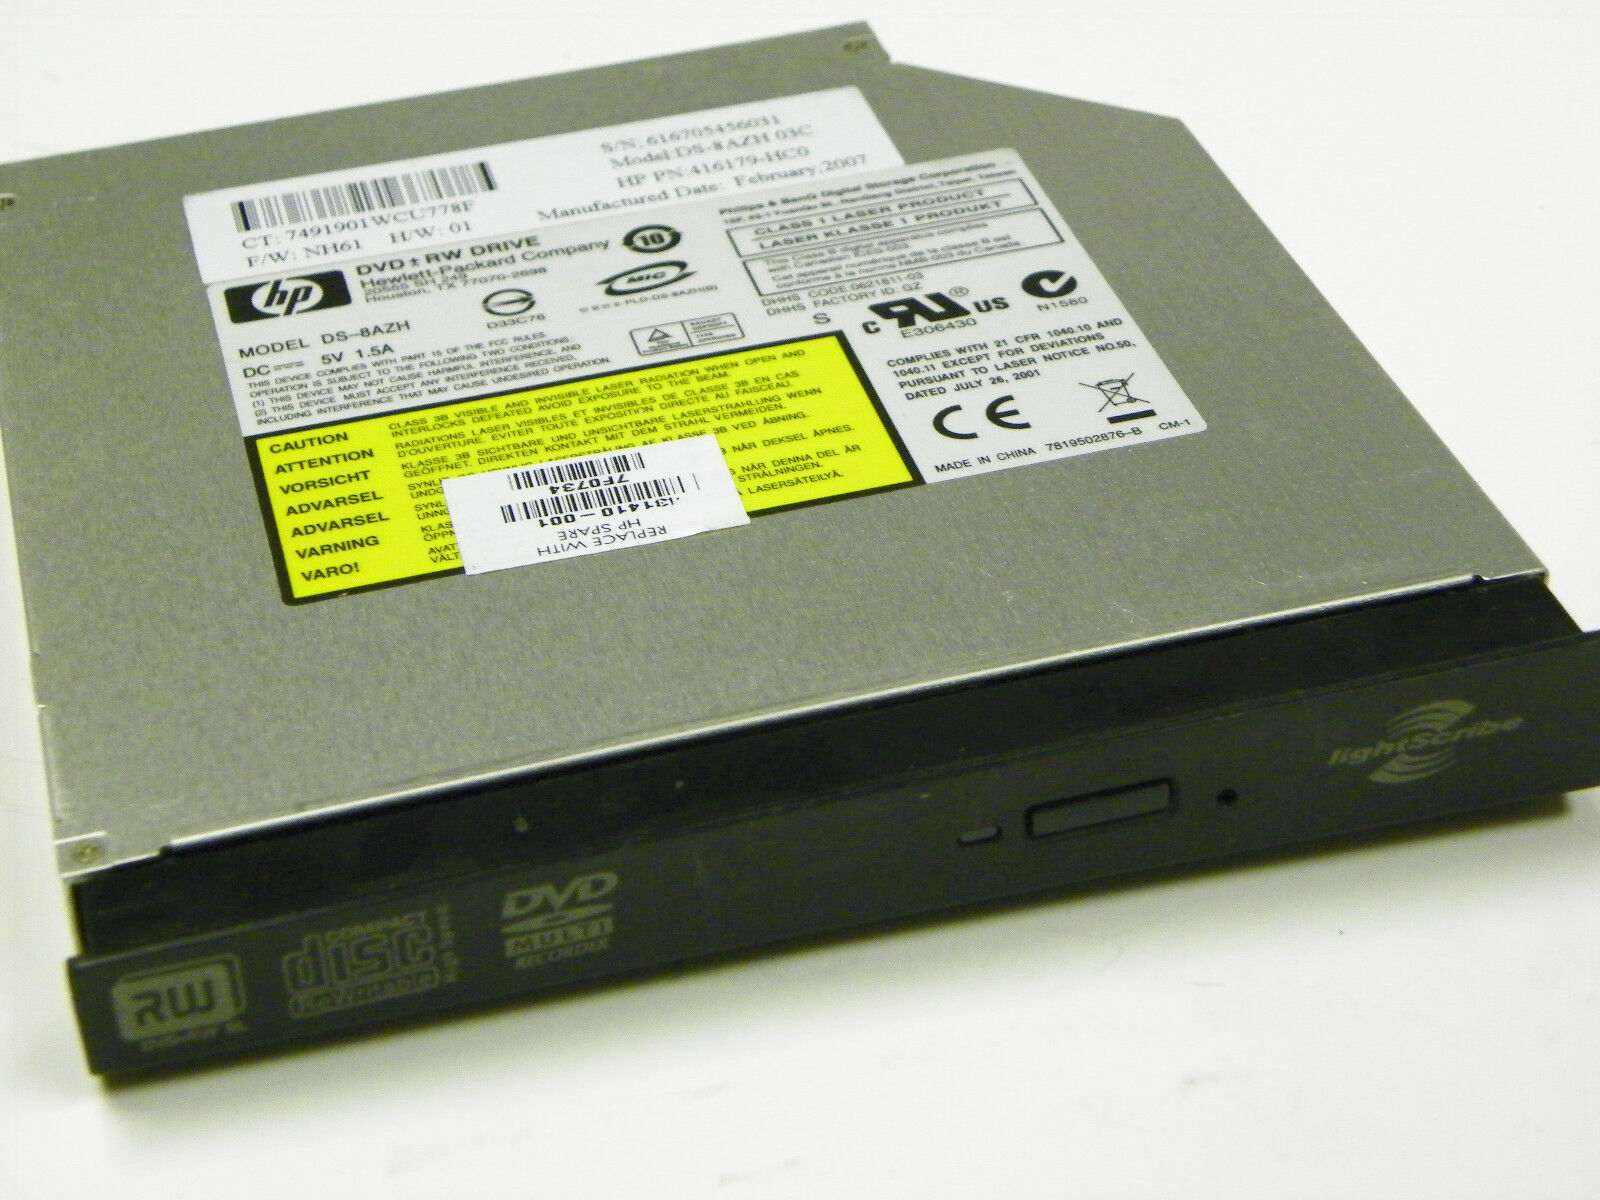 Philips DS-8AZH Slim IDE DVD±RW Lightscribe HP Laptop Drive 431410-001